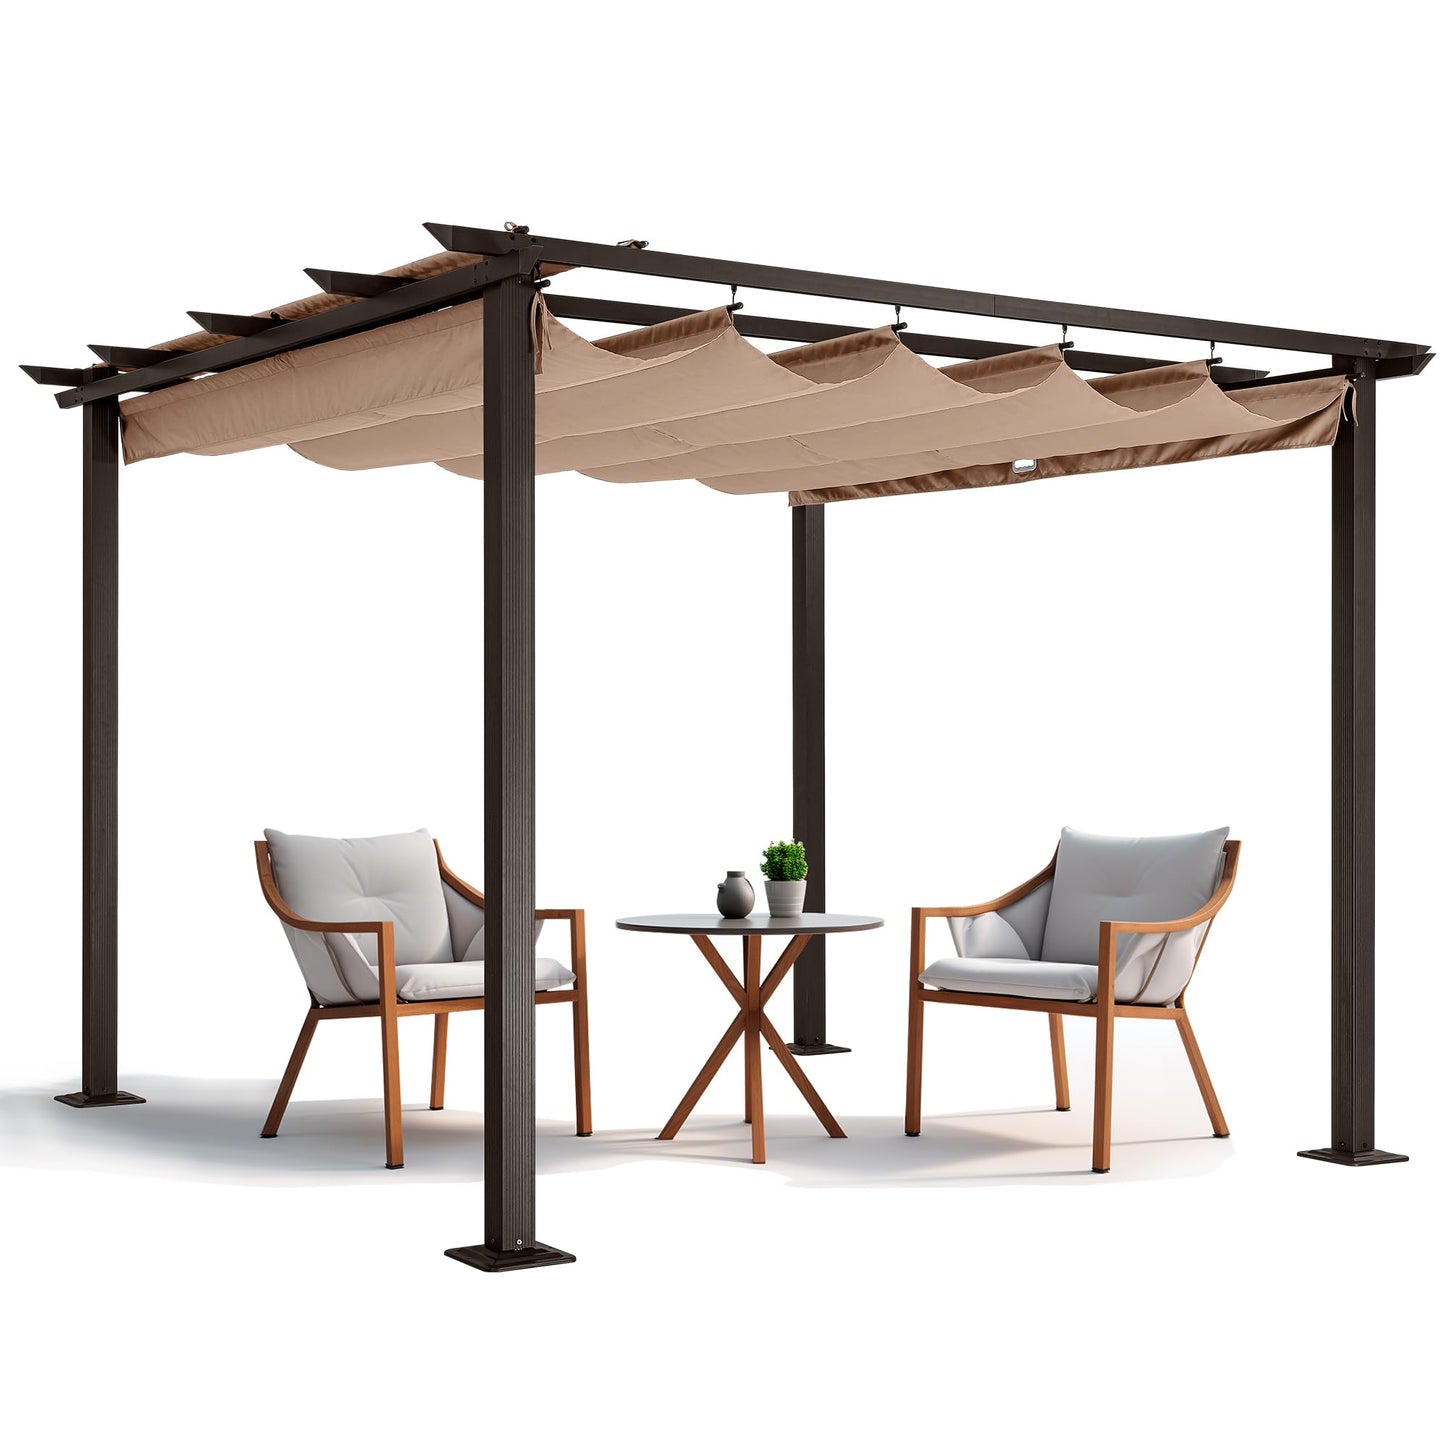 ZEPYARD 10X10 FT Outdoor Pergola, Aluminum Pergola with Sun Shade Retractable Canopy, Patio Retractable Pergola for Deck, Backyard, Grill (Brown)